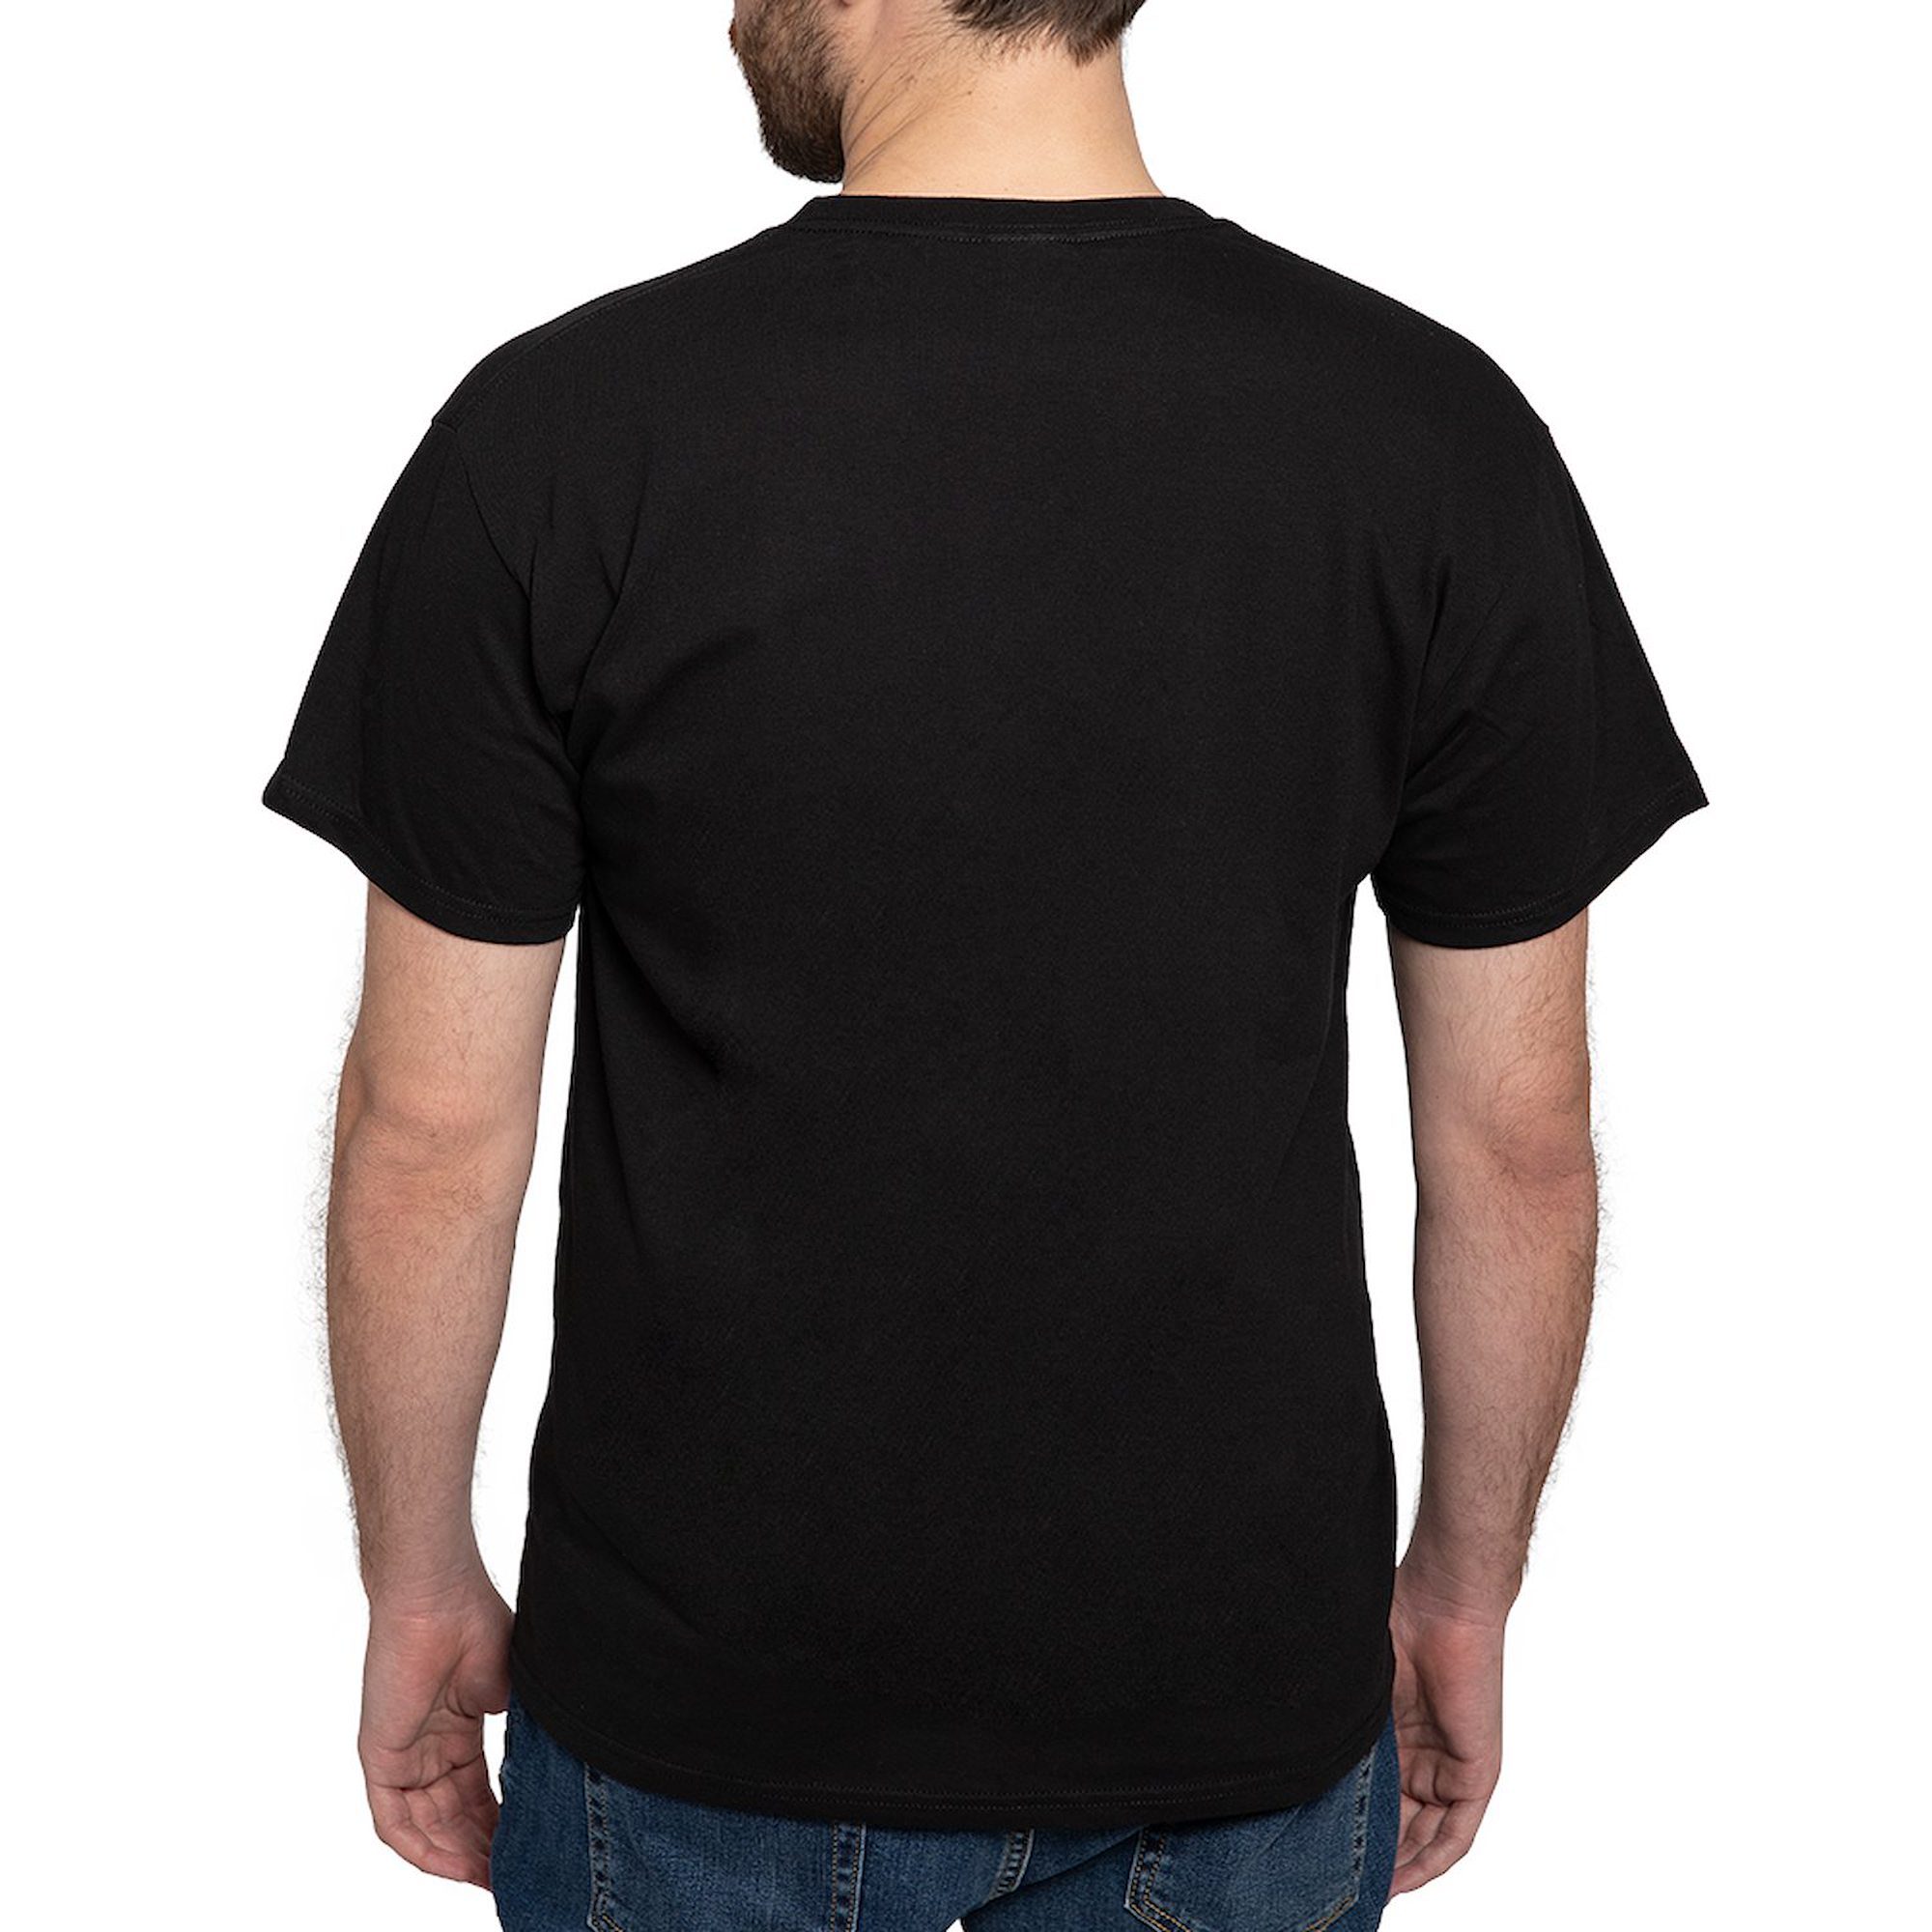 CafePress - Old School (Distressed) Dark T Shirt - 100% Cotton T-Shirt - image 2 of 4